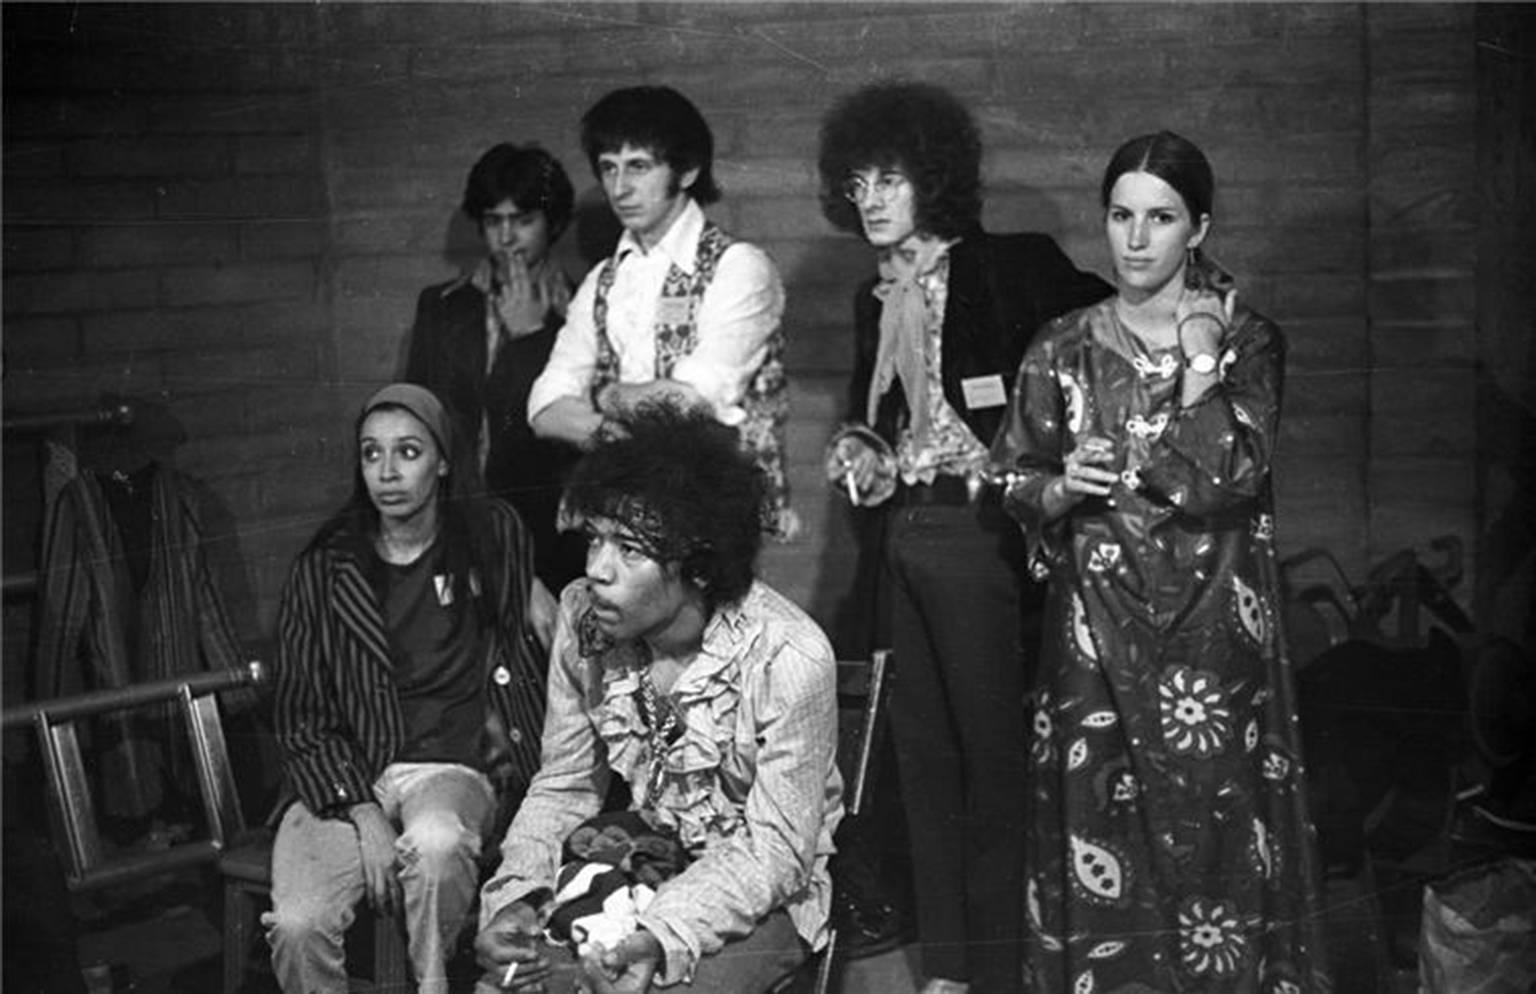 Portrait Photograph Henry Diltz - Jimi Hendrix, Monterey, CA 1967